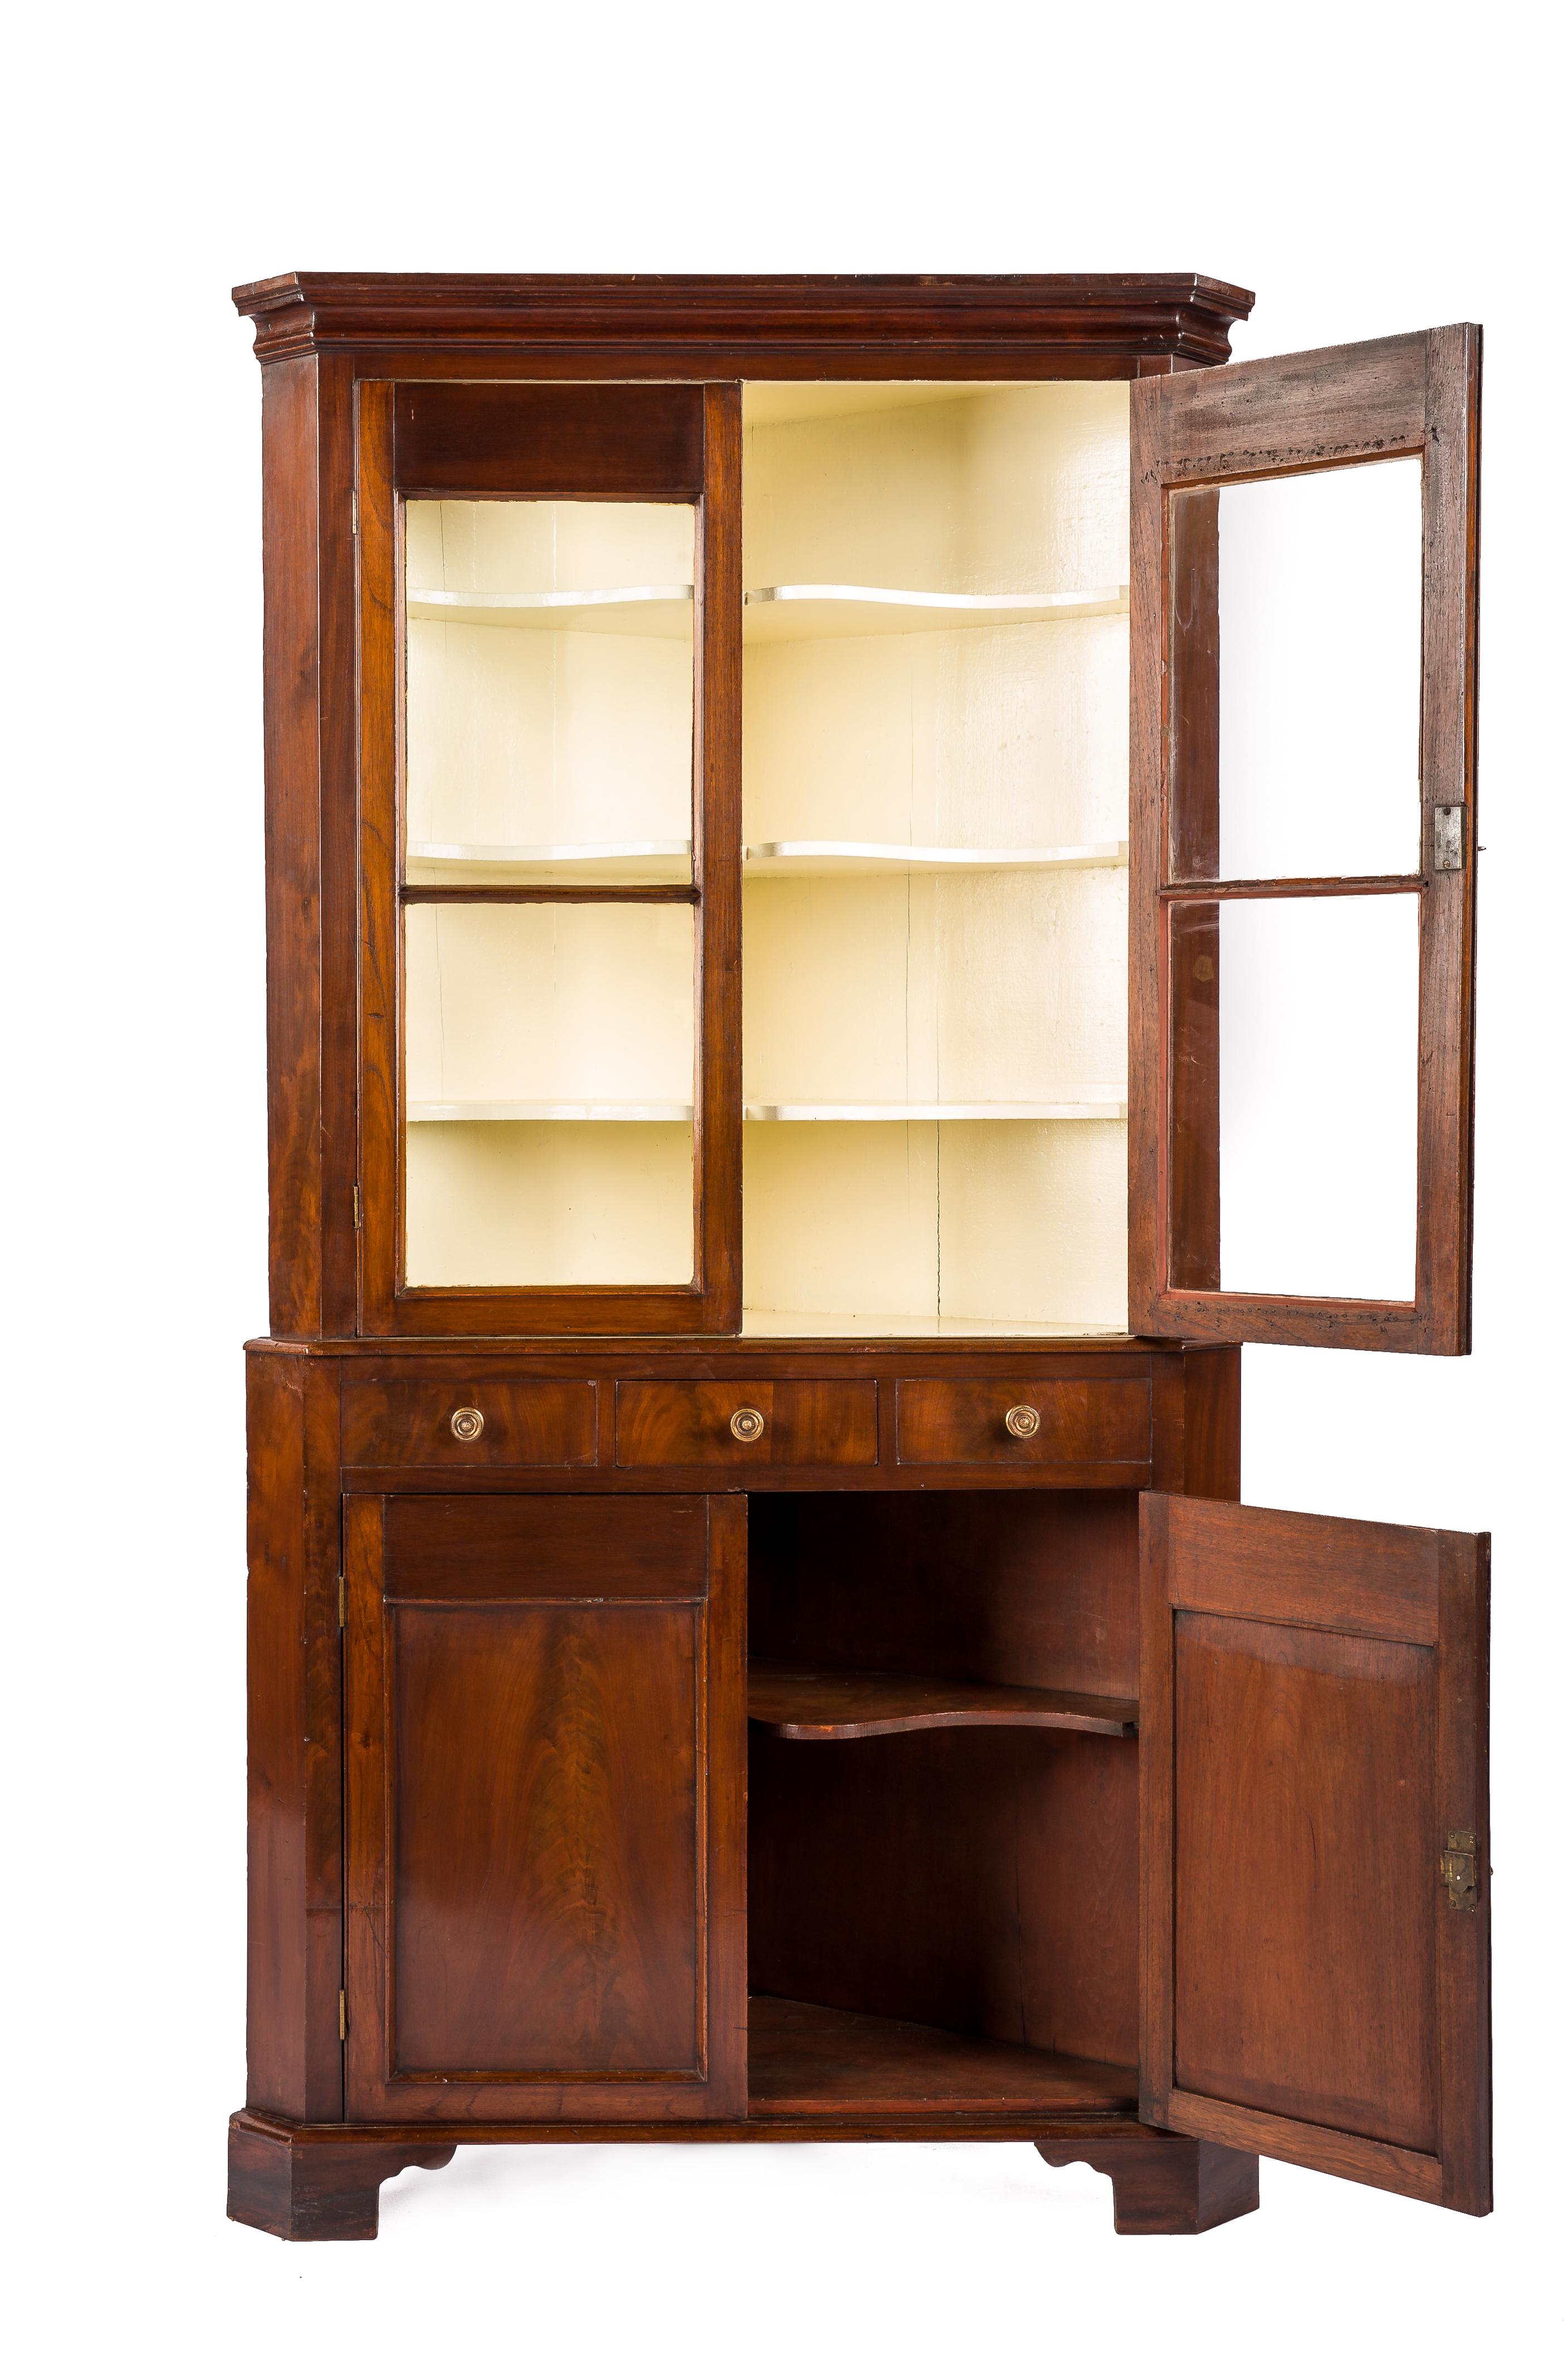 British Antique Early 19th Century English Regency Mahogany Glazed Corner Cupboard For Sale